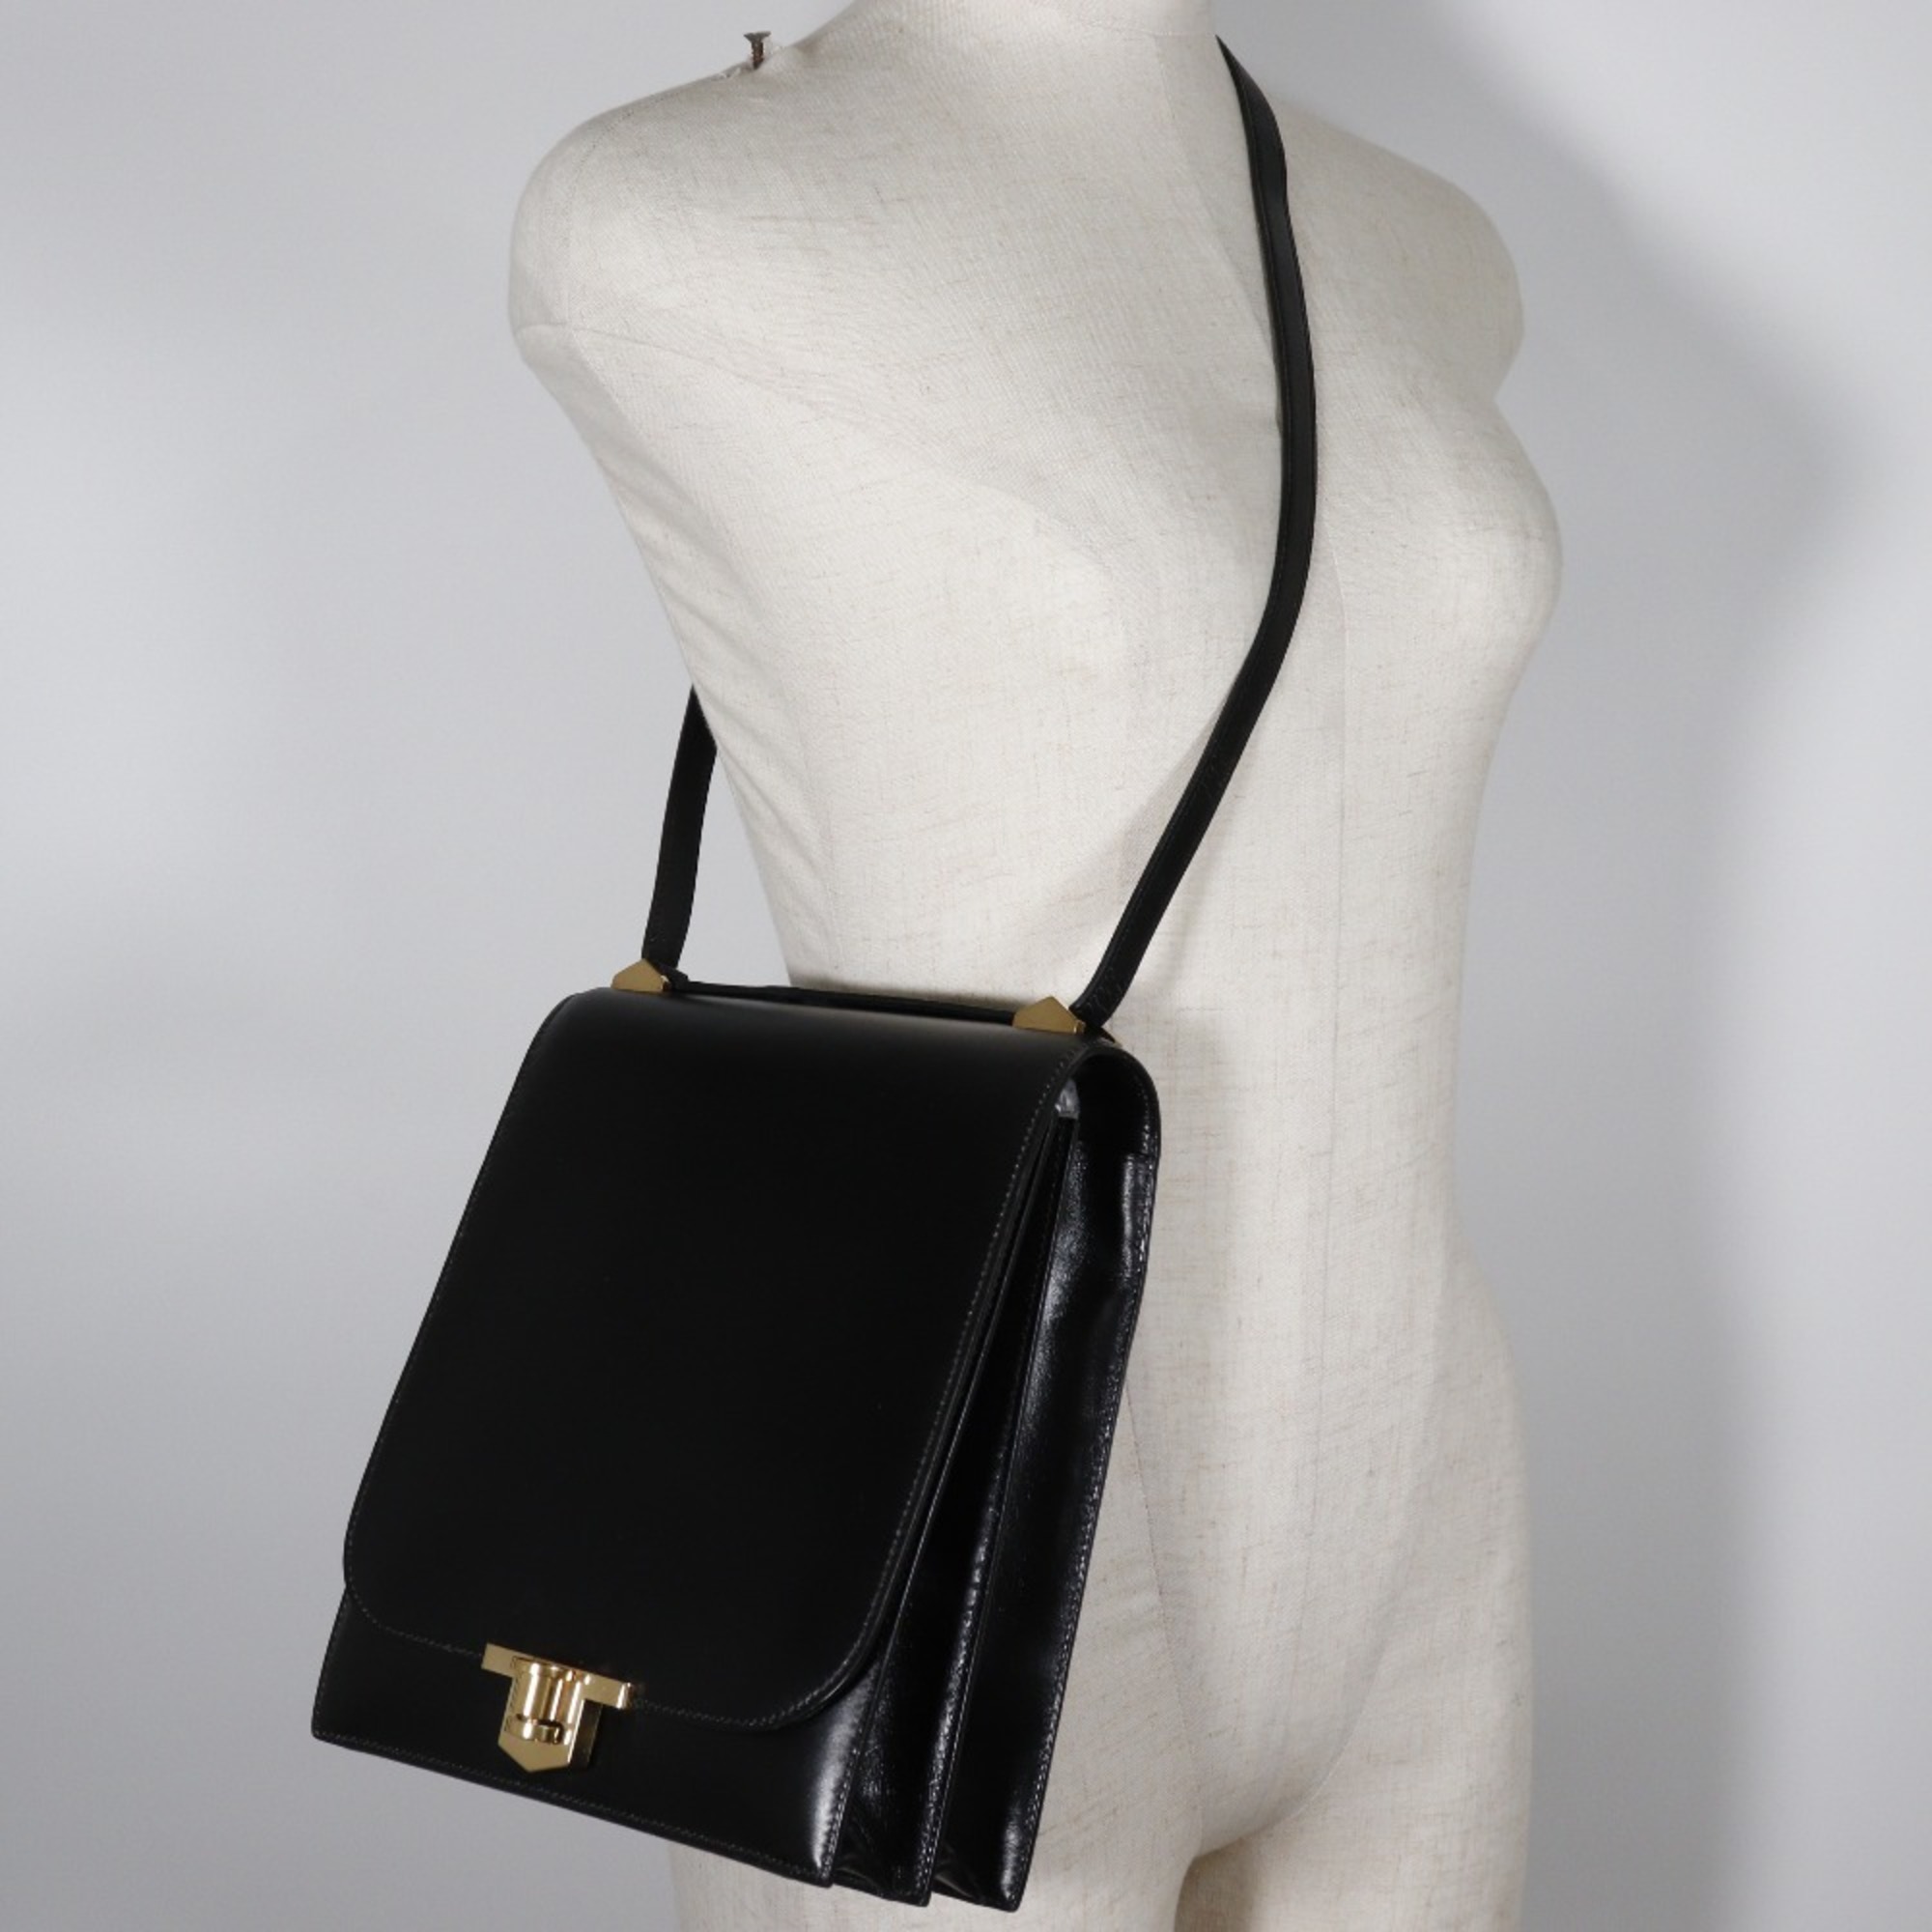 HERMES Chianti Shoulder Bag One Vintage Box Calf Made in France Black/Gold Hardware Handbag 2way Flap Women's